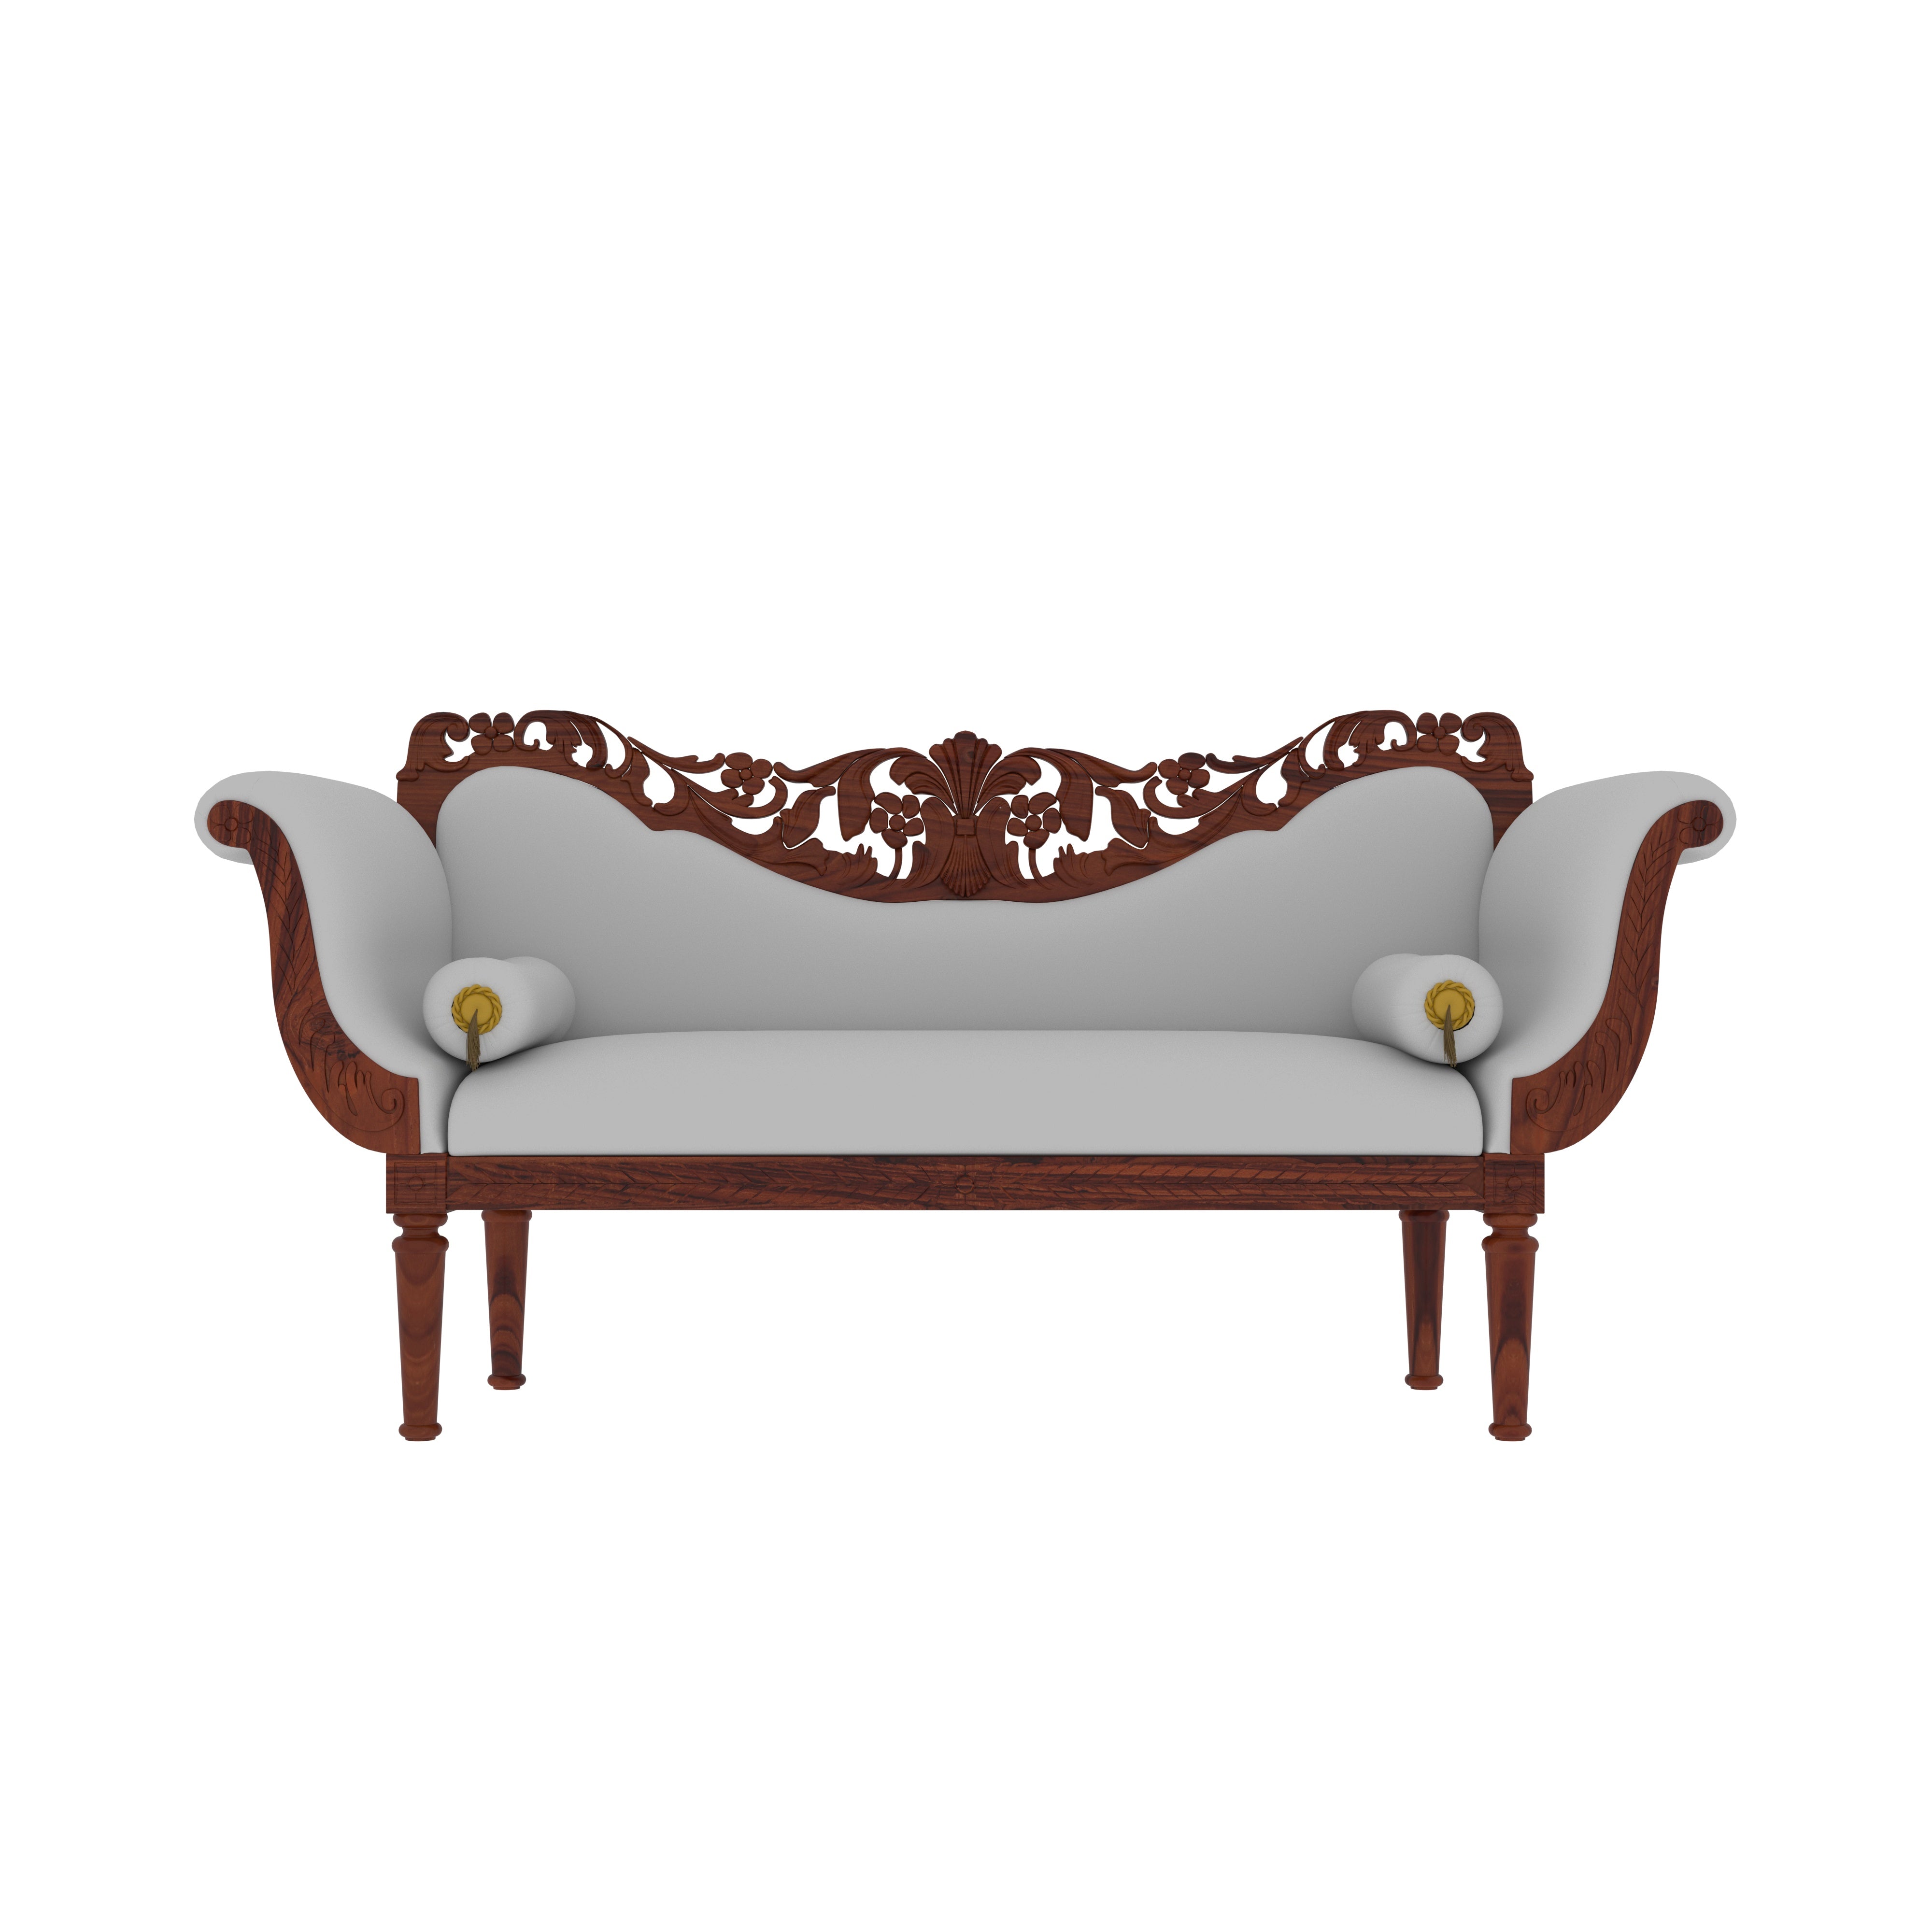 Antique Living Room Sofa with Craving Design Sofa